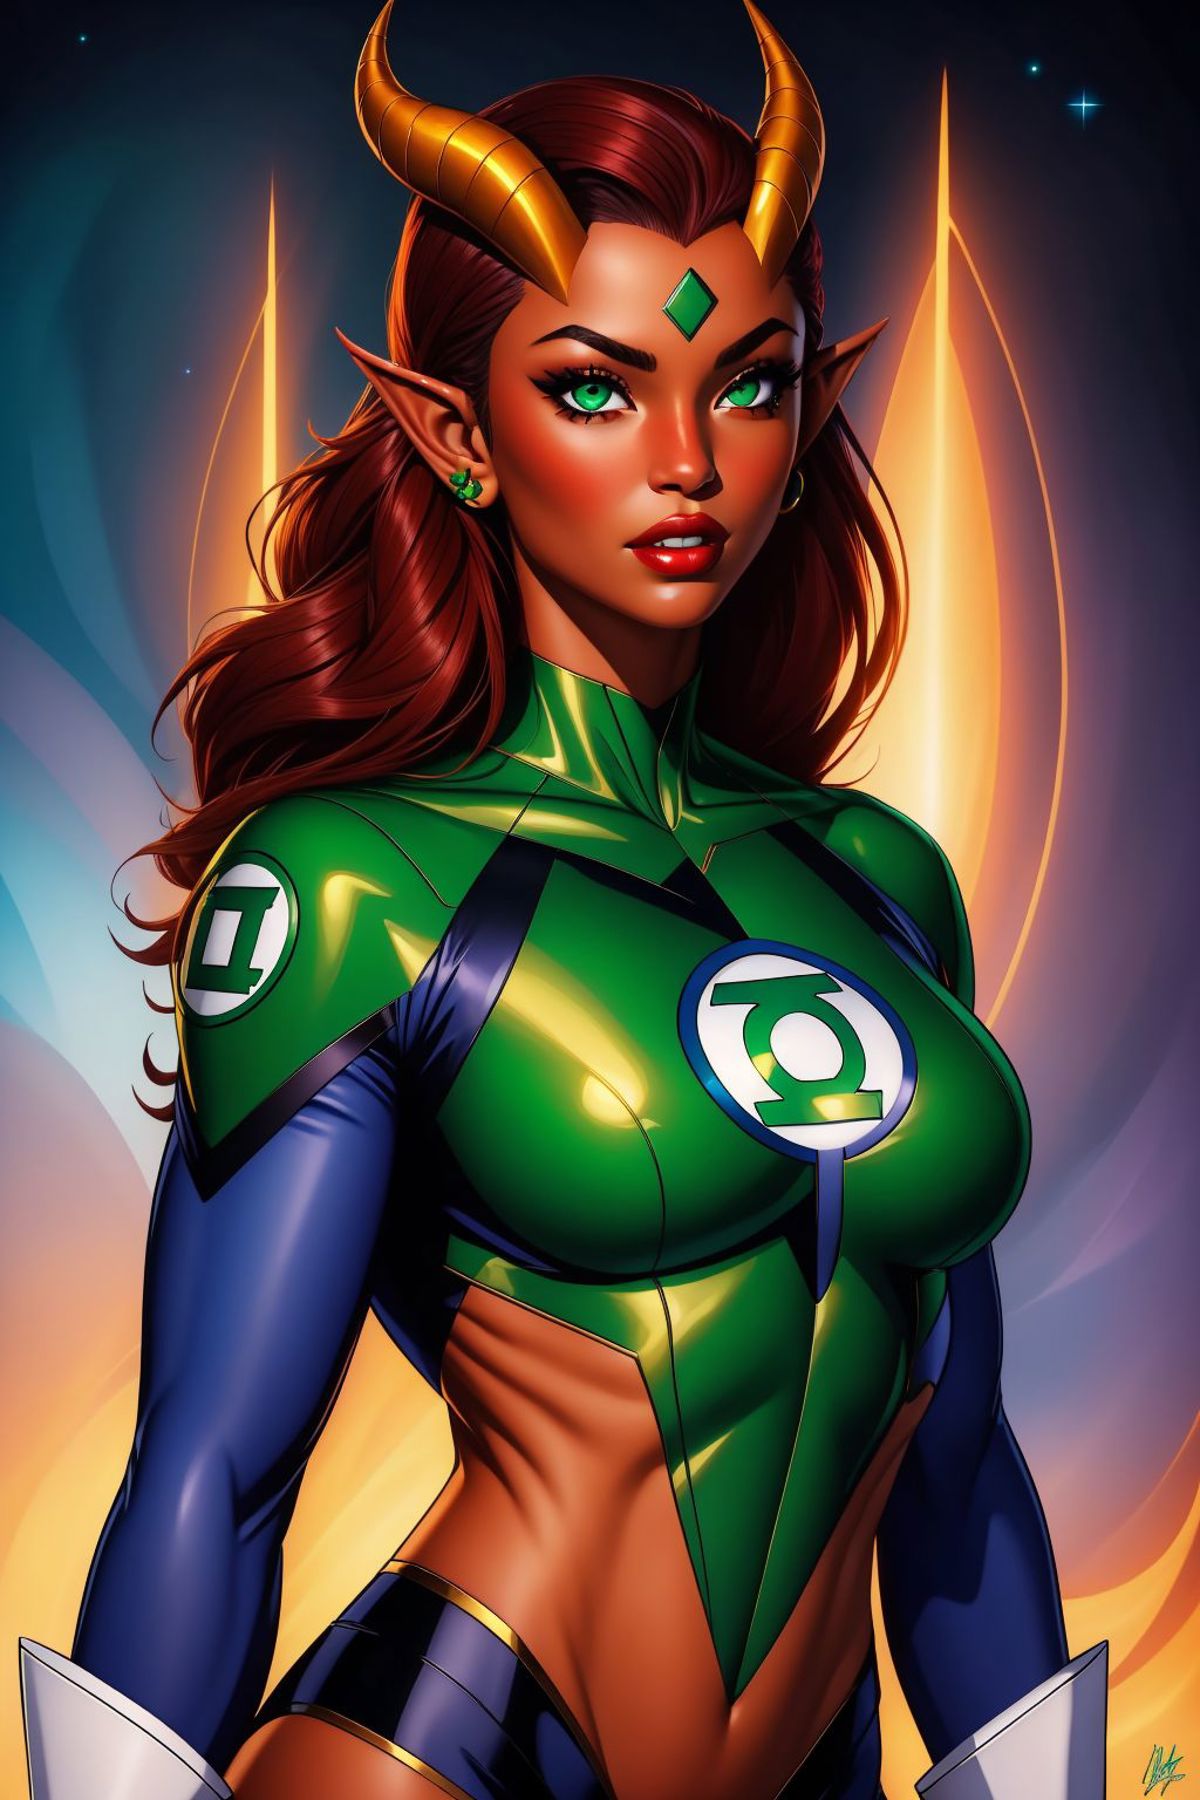 Green Lantern Costume image by Montitto